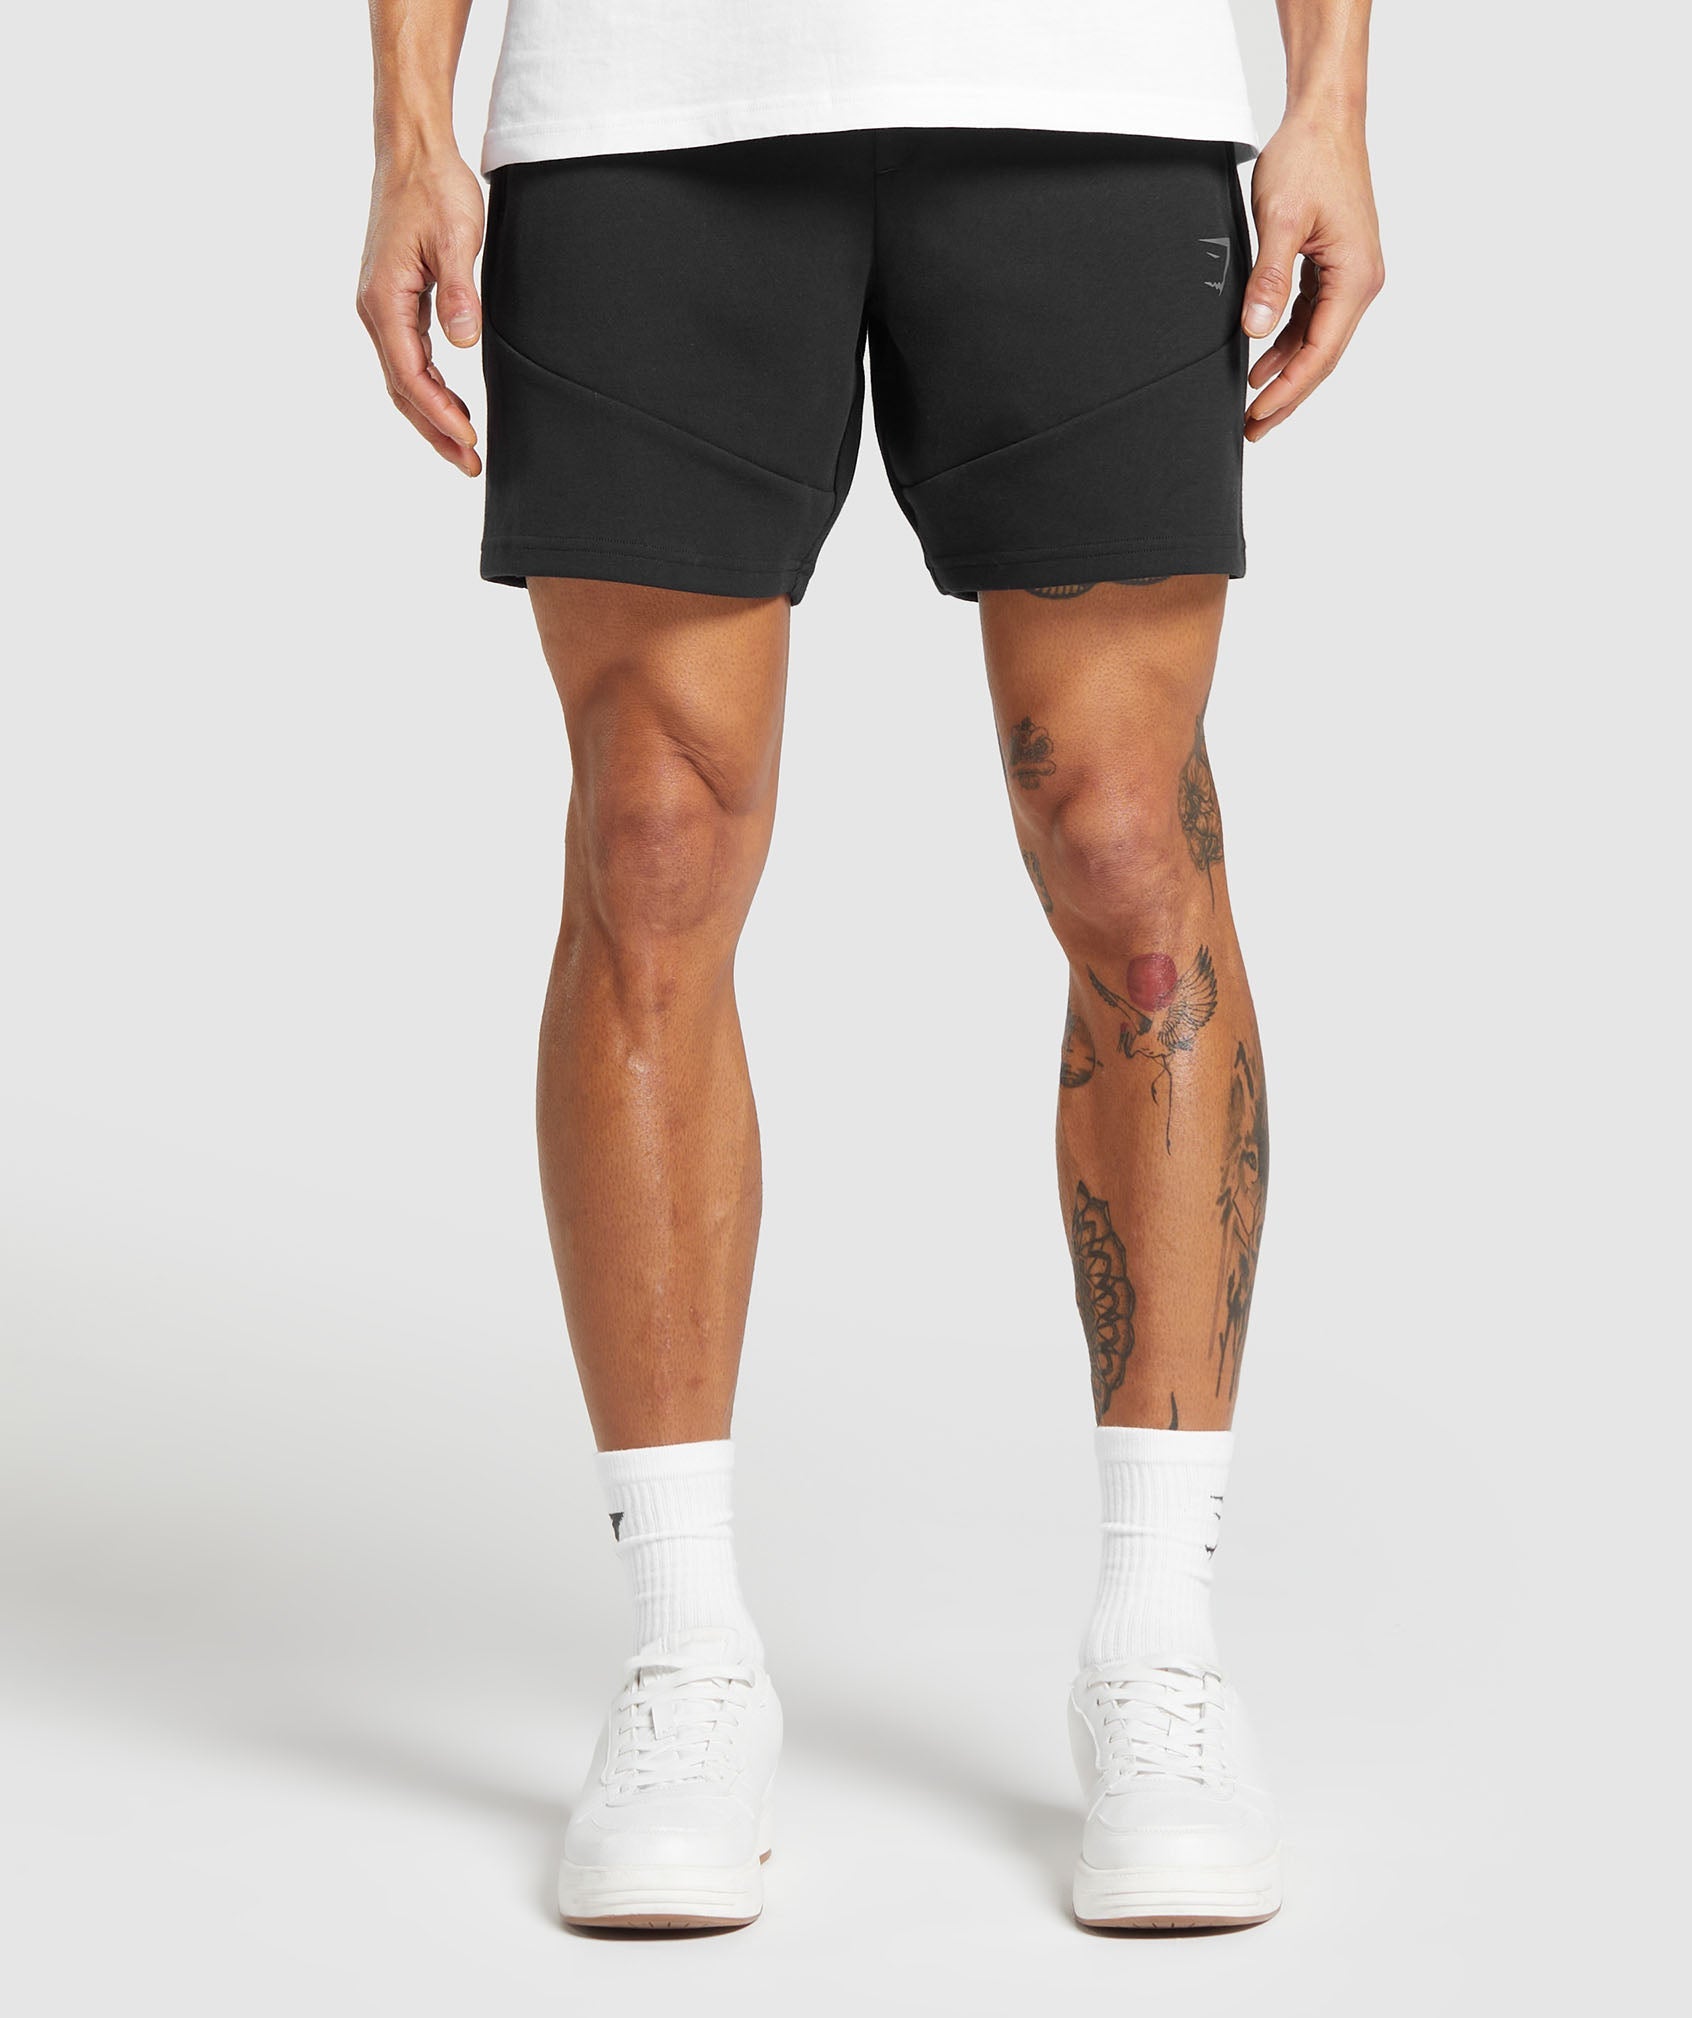 Interlock Tech 6" Shorts in Black